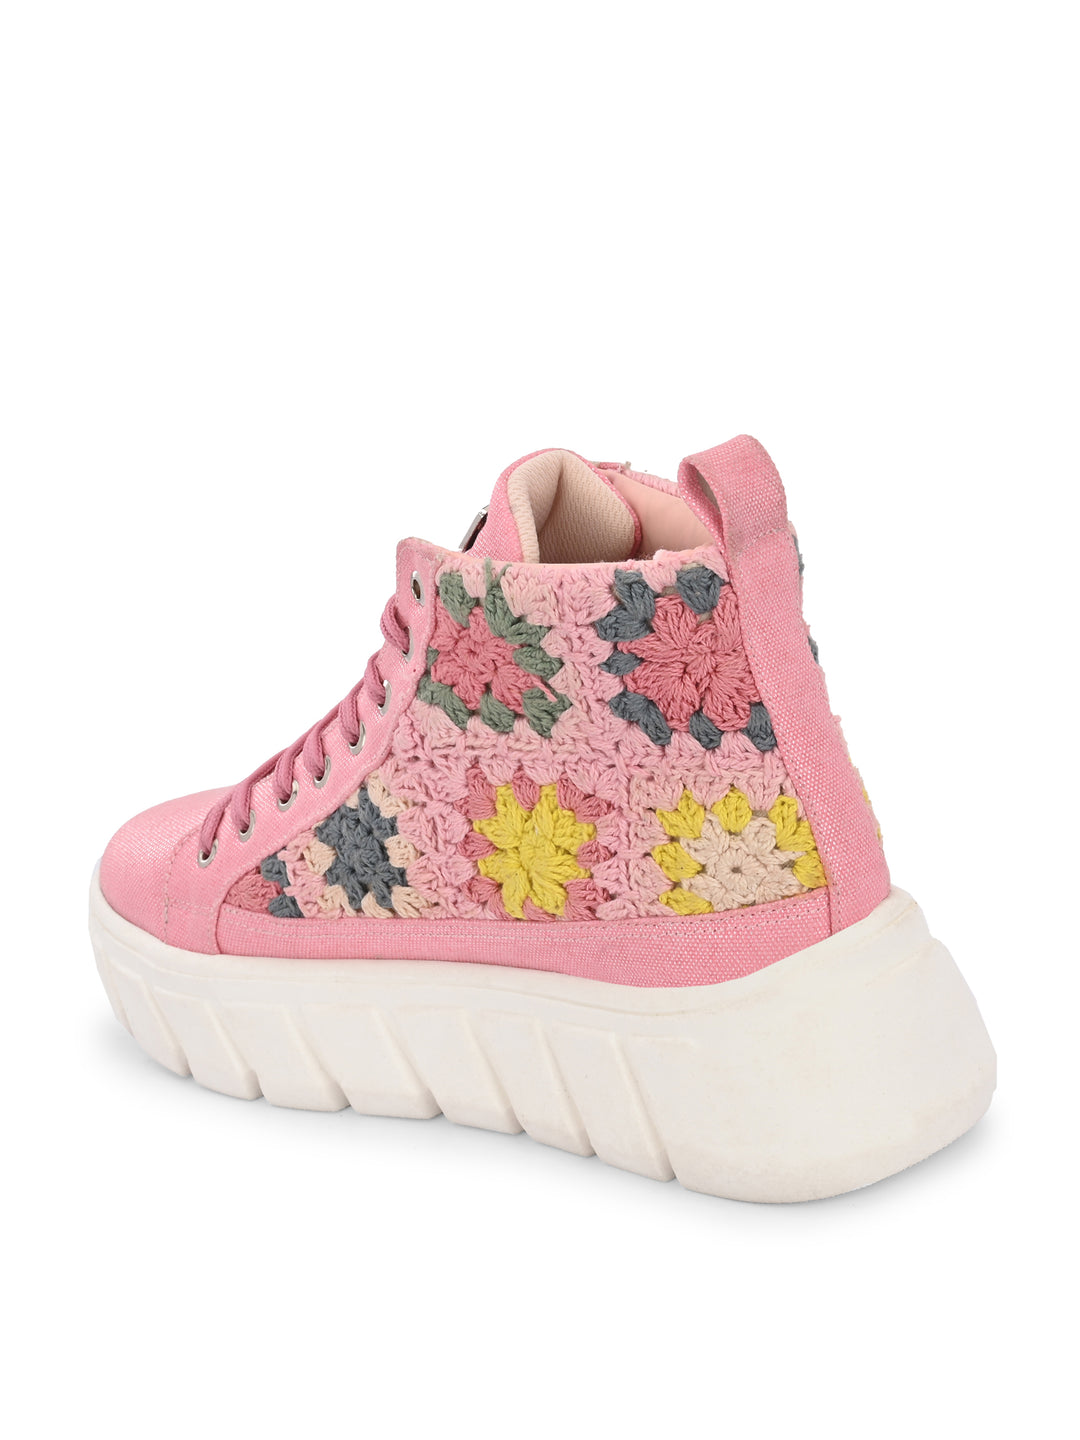 Senorita Pink Canvas Floral Shoes For Women